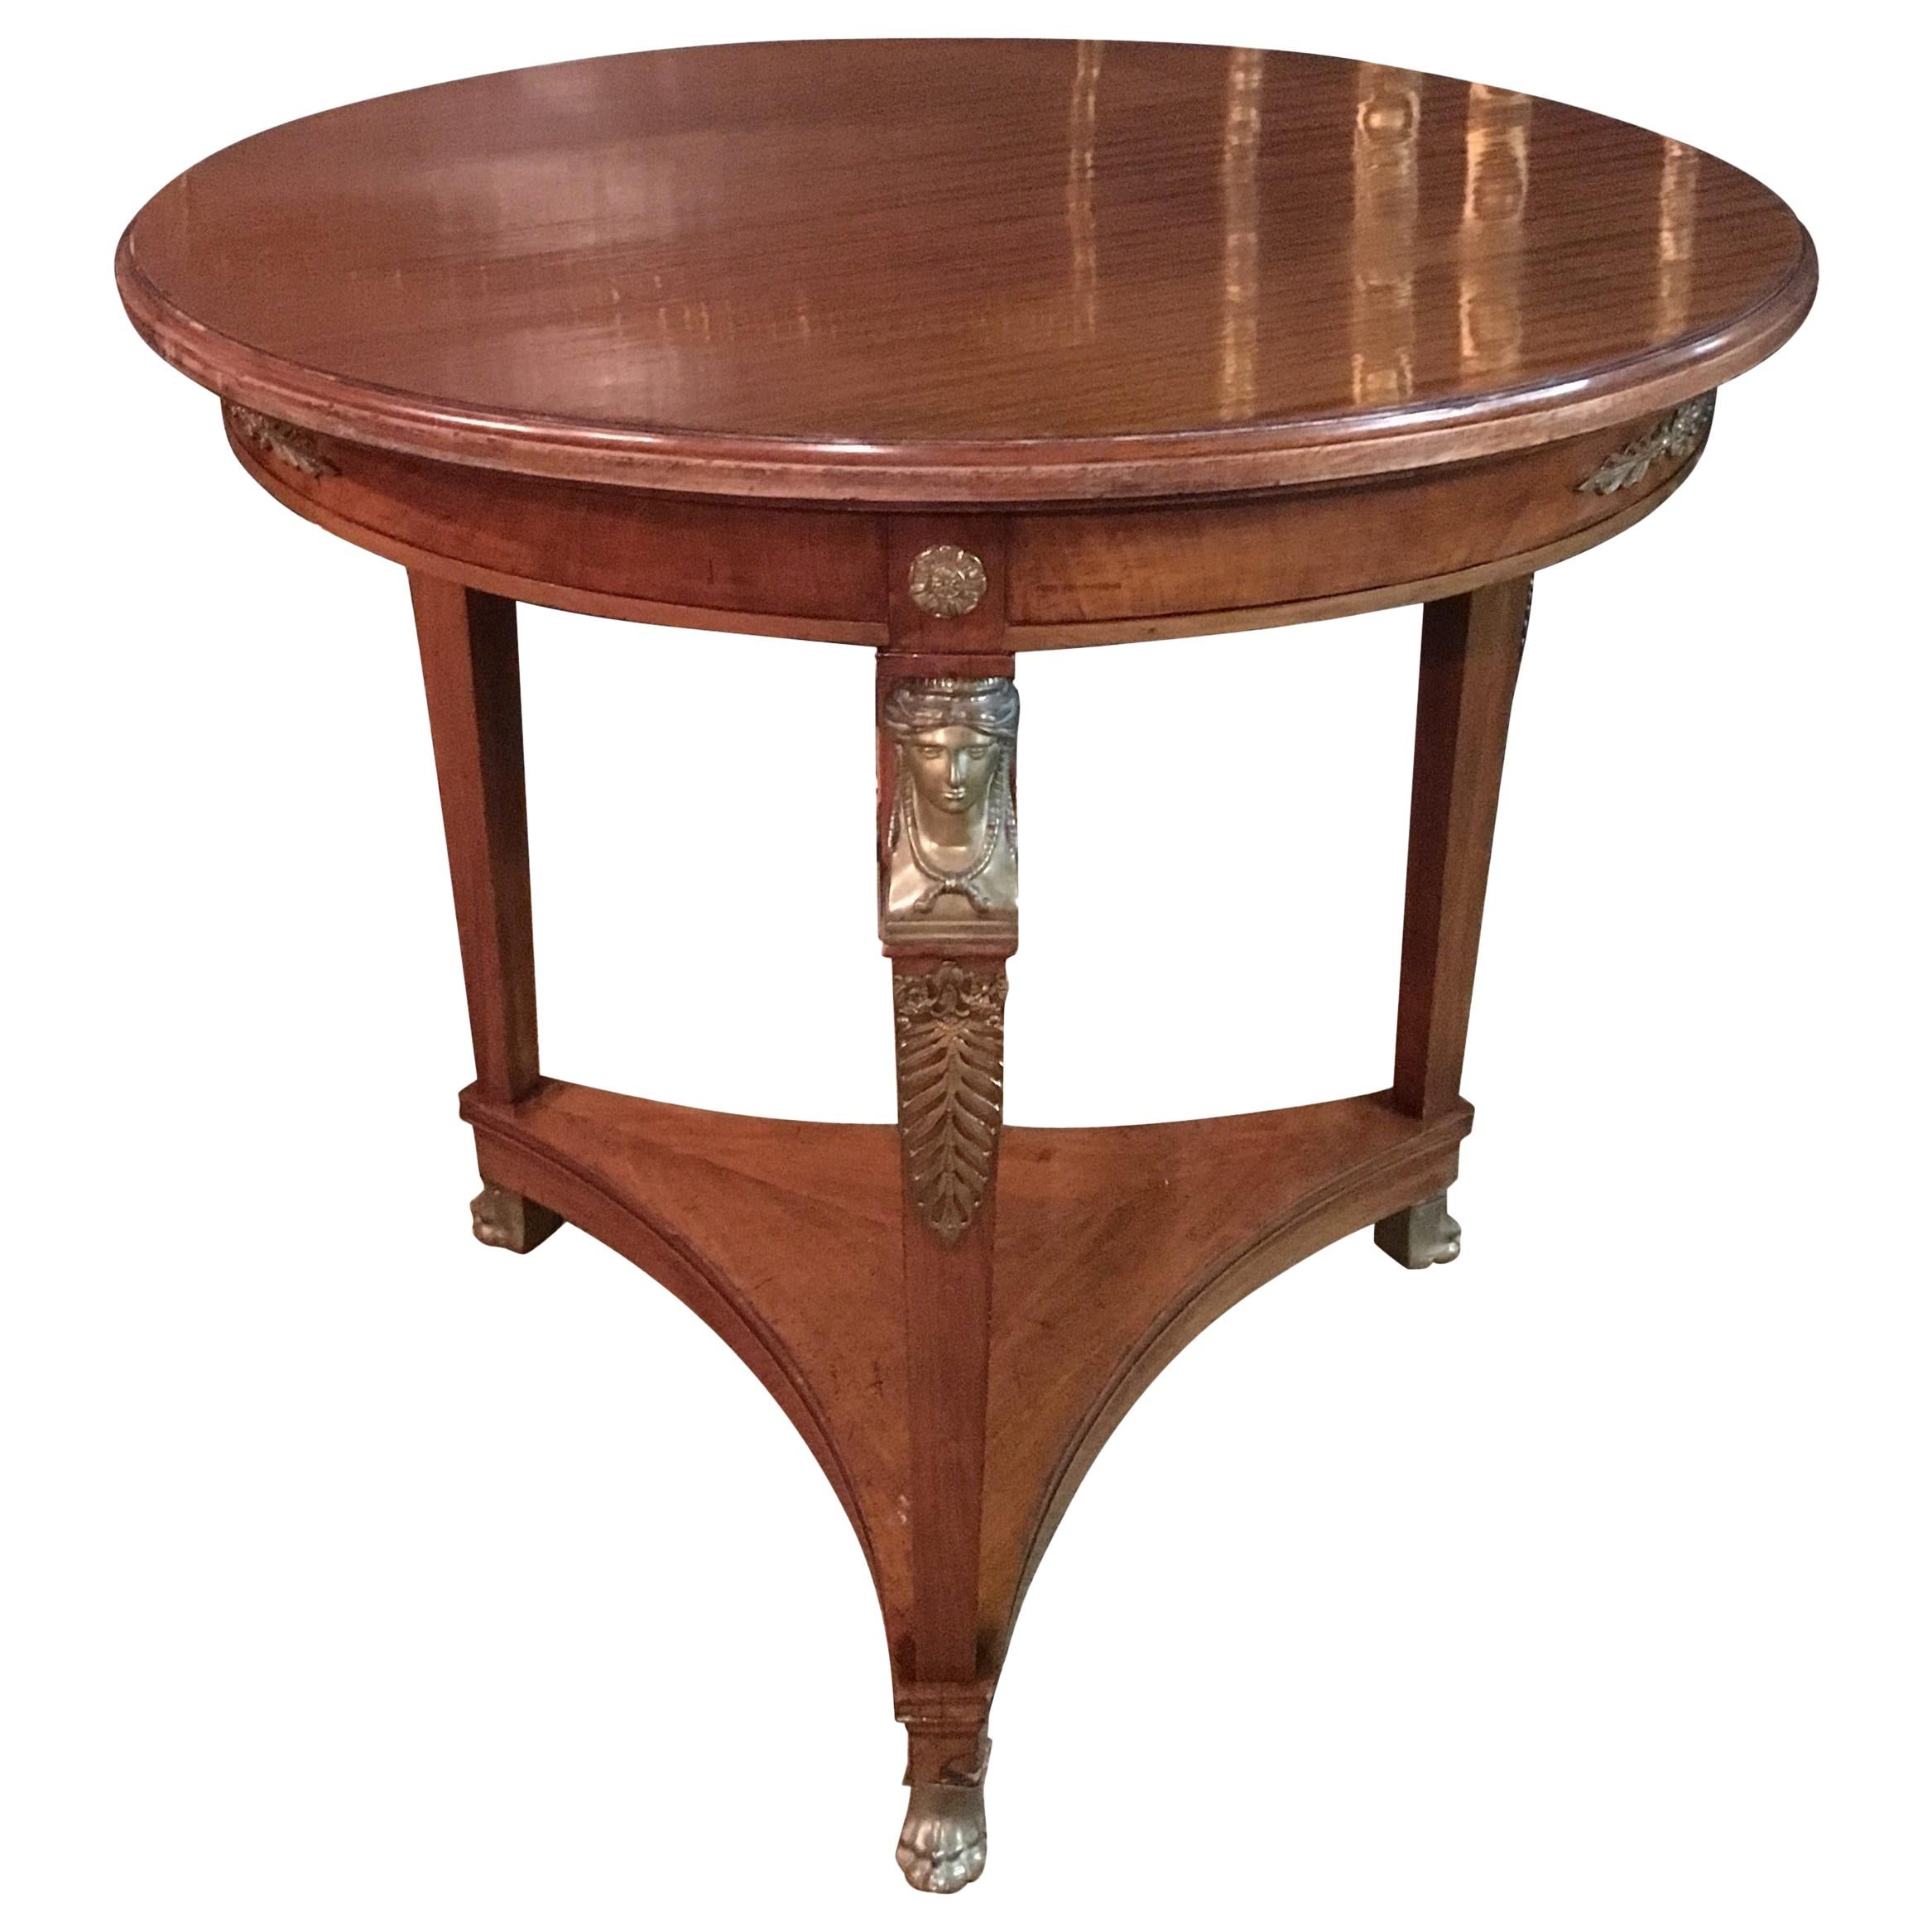 Original antique Empire Table circa 1860 - 1880 Mahogany veneer bronzed 